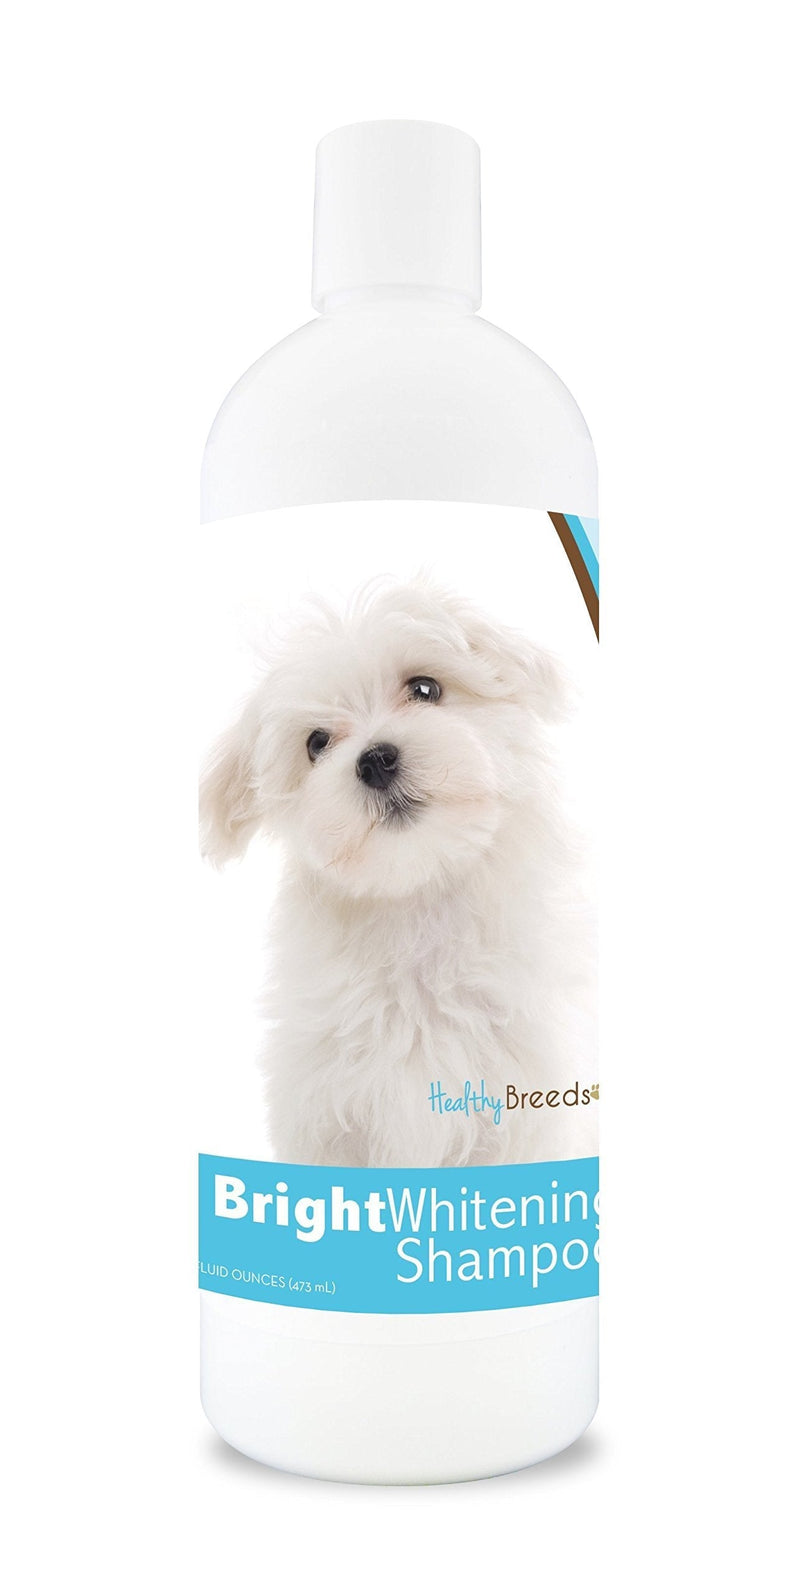 [Australia] - Healthy Breeds Bright Whitening Dog Shampoo for White & Lighter Fur - Over 150 Breeds - Pina Colada Scent - 12 oz Maltese 